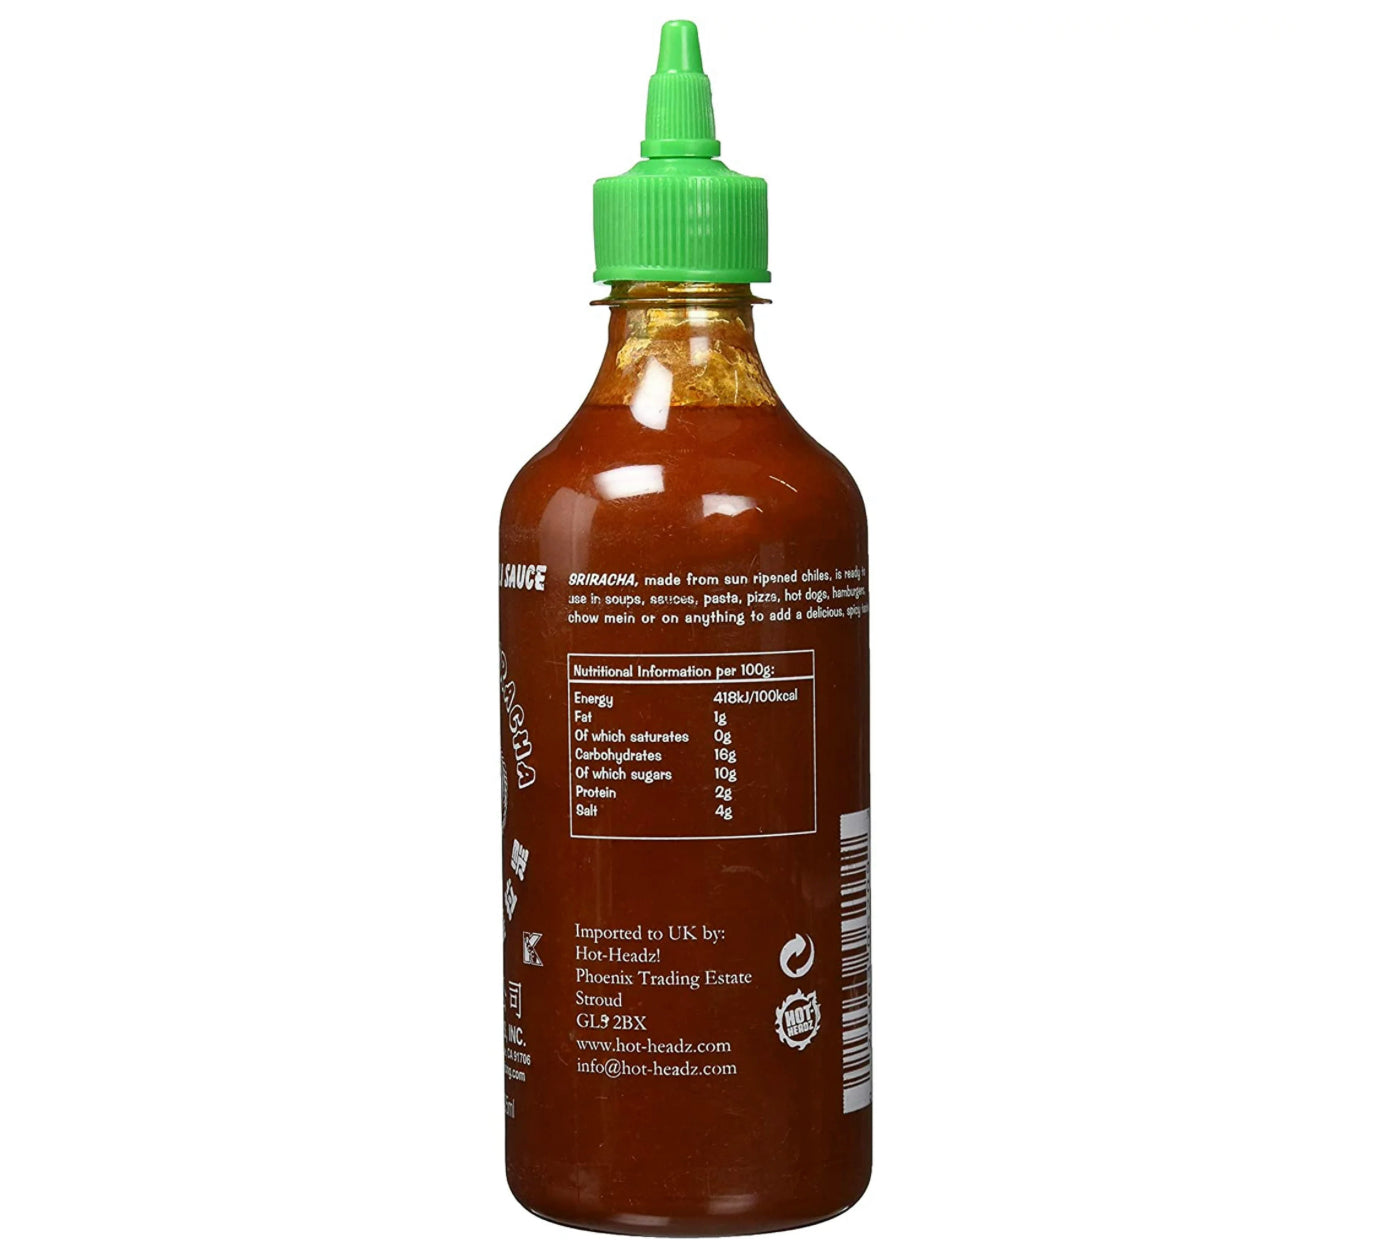 Huy Fong Sriracha Hot Chili Sauce 17oz